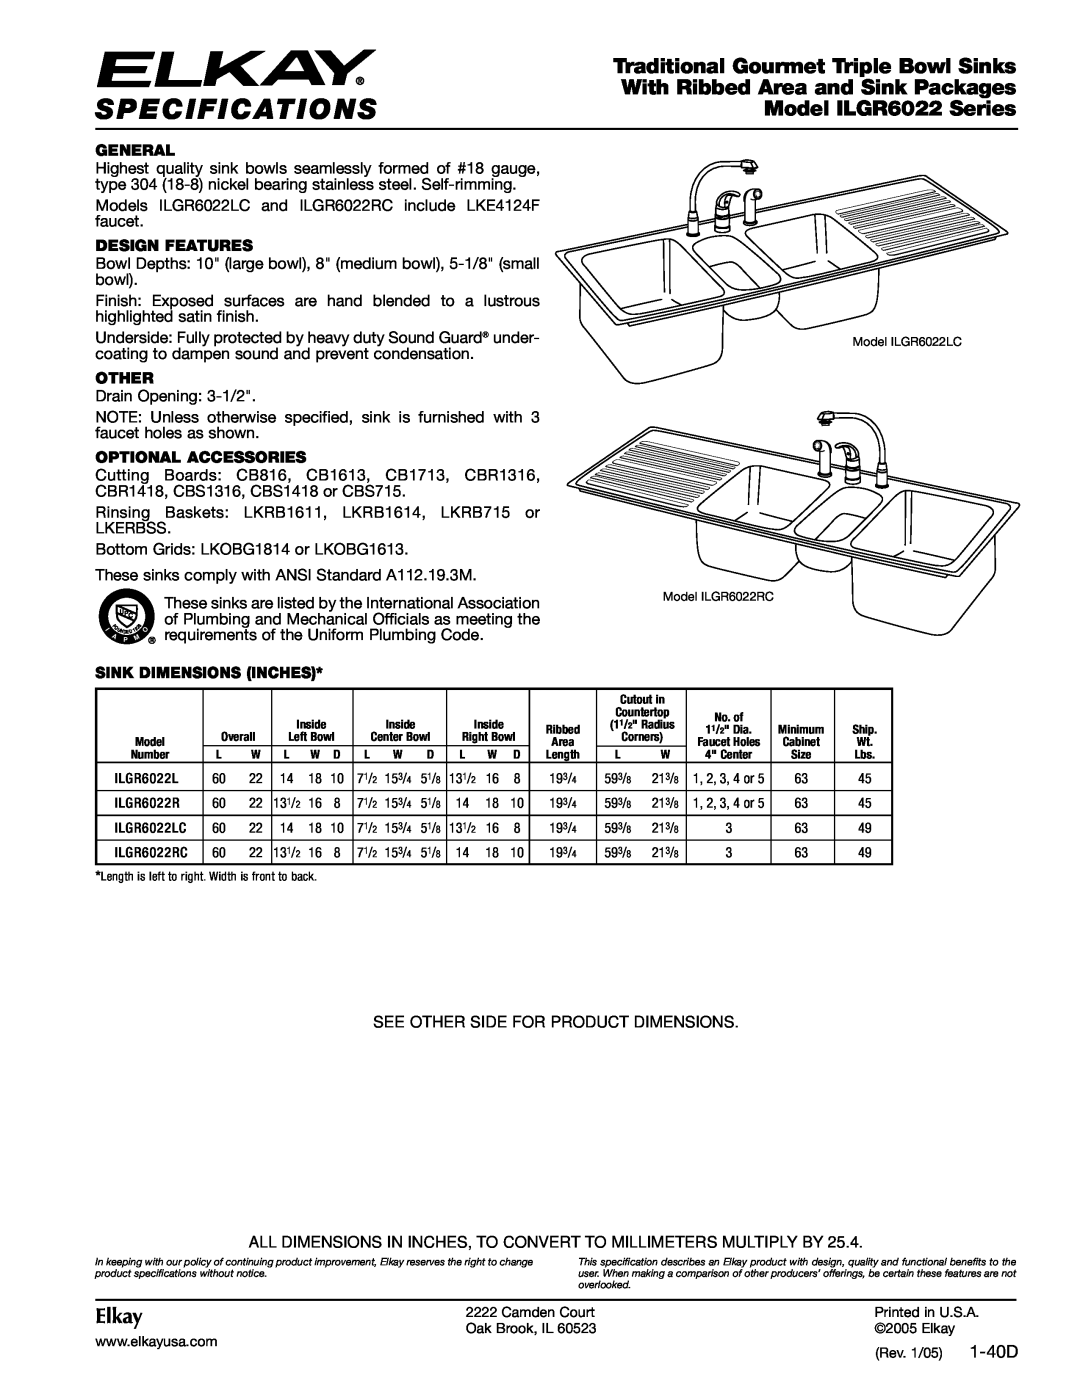 Elkay specifications Specifications, Traditional Gourmet Triple Bowl Sinks, Model ILGR6022 Series, Elkay, 1-40D, Other 